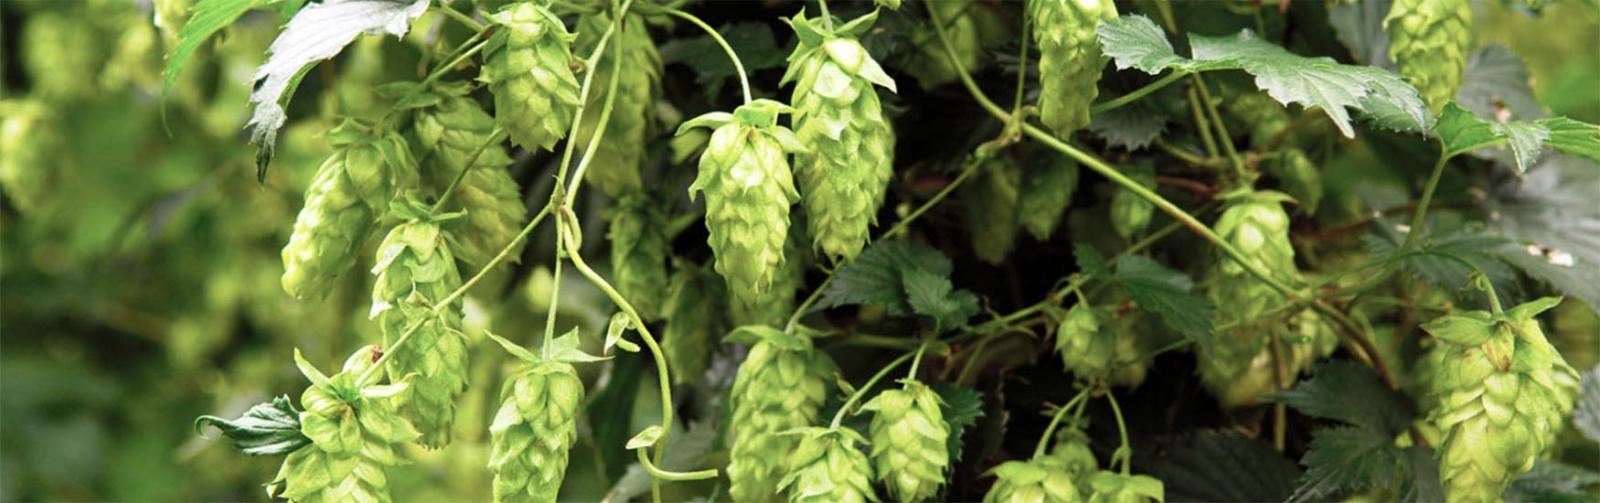 Tasmanian hops used to create craft beer